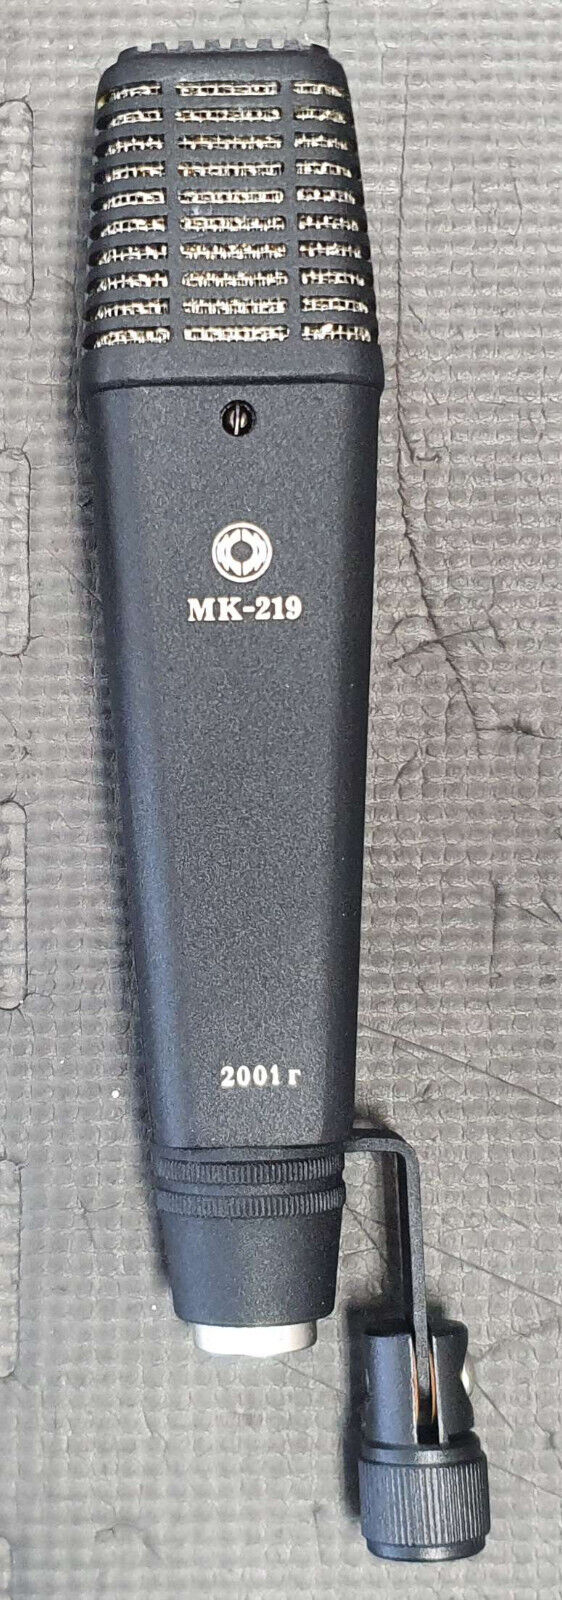 Oktava MK 219 Microphone